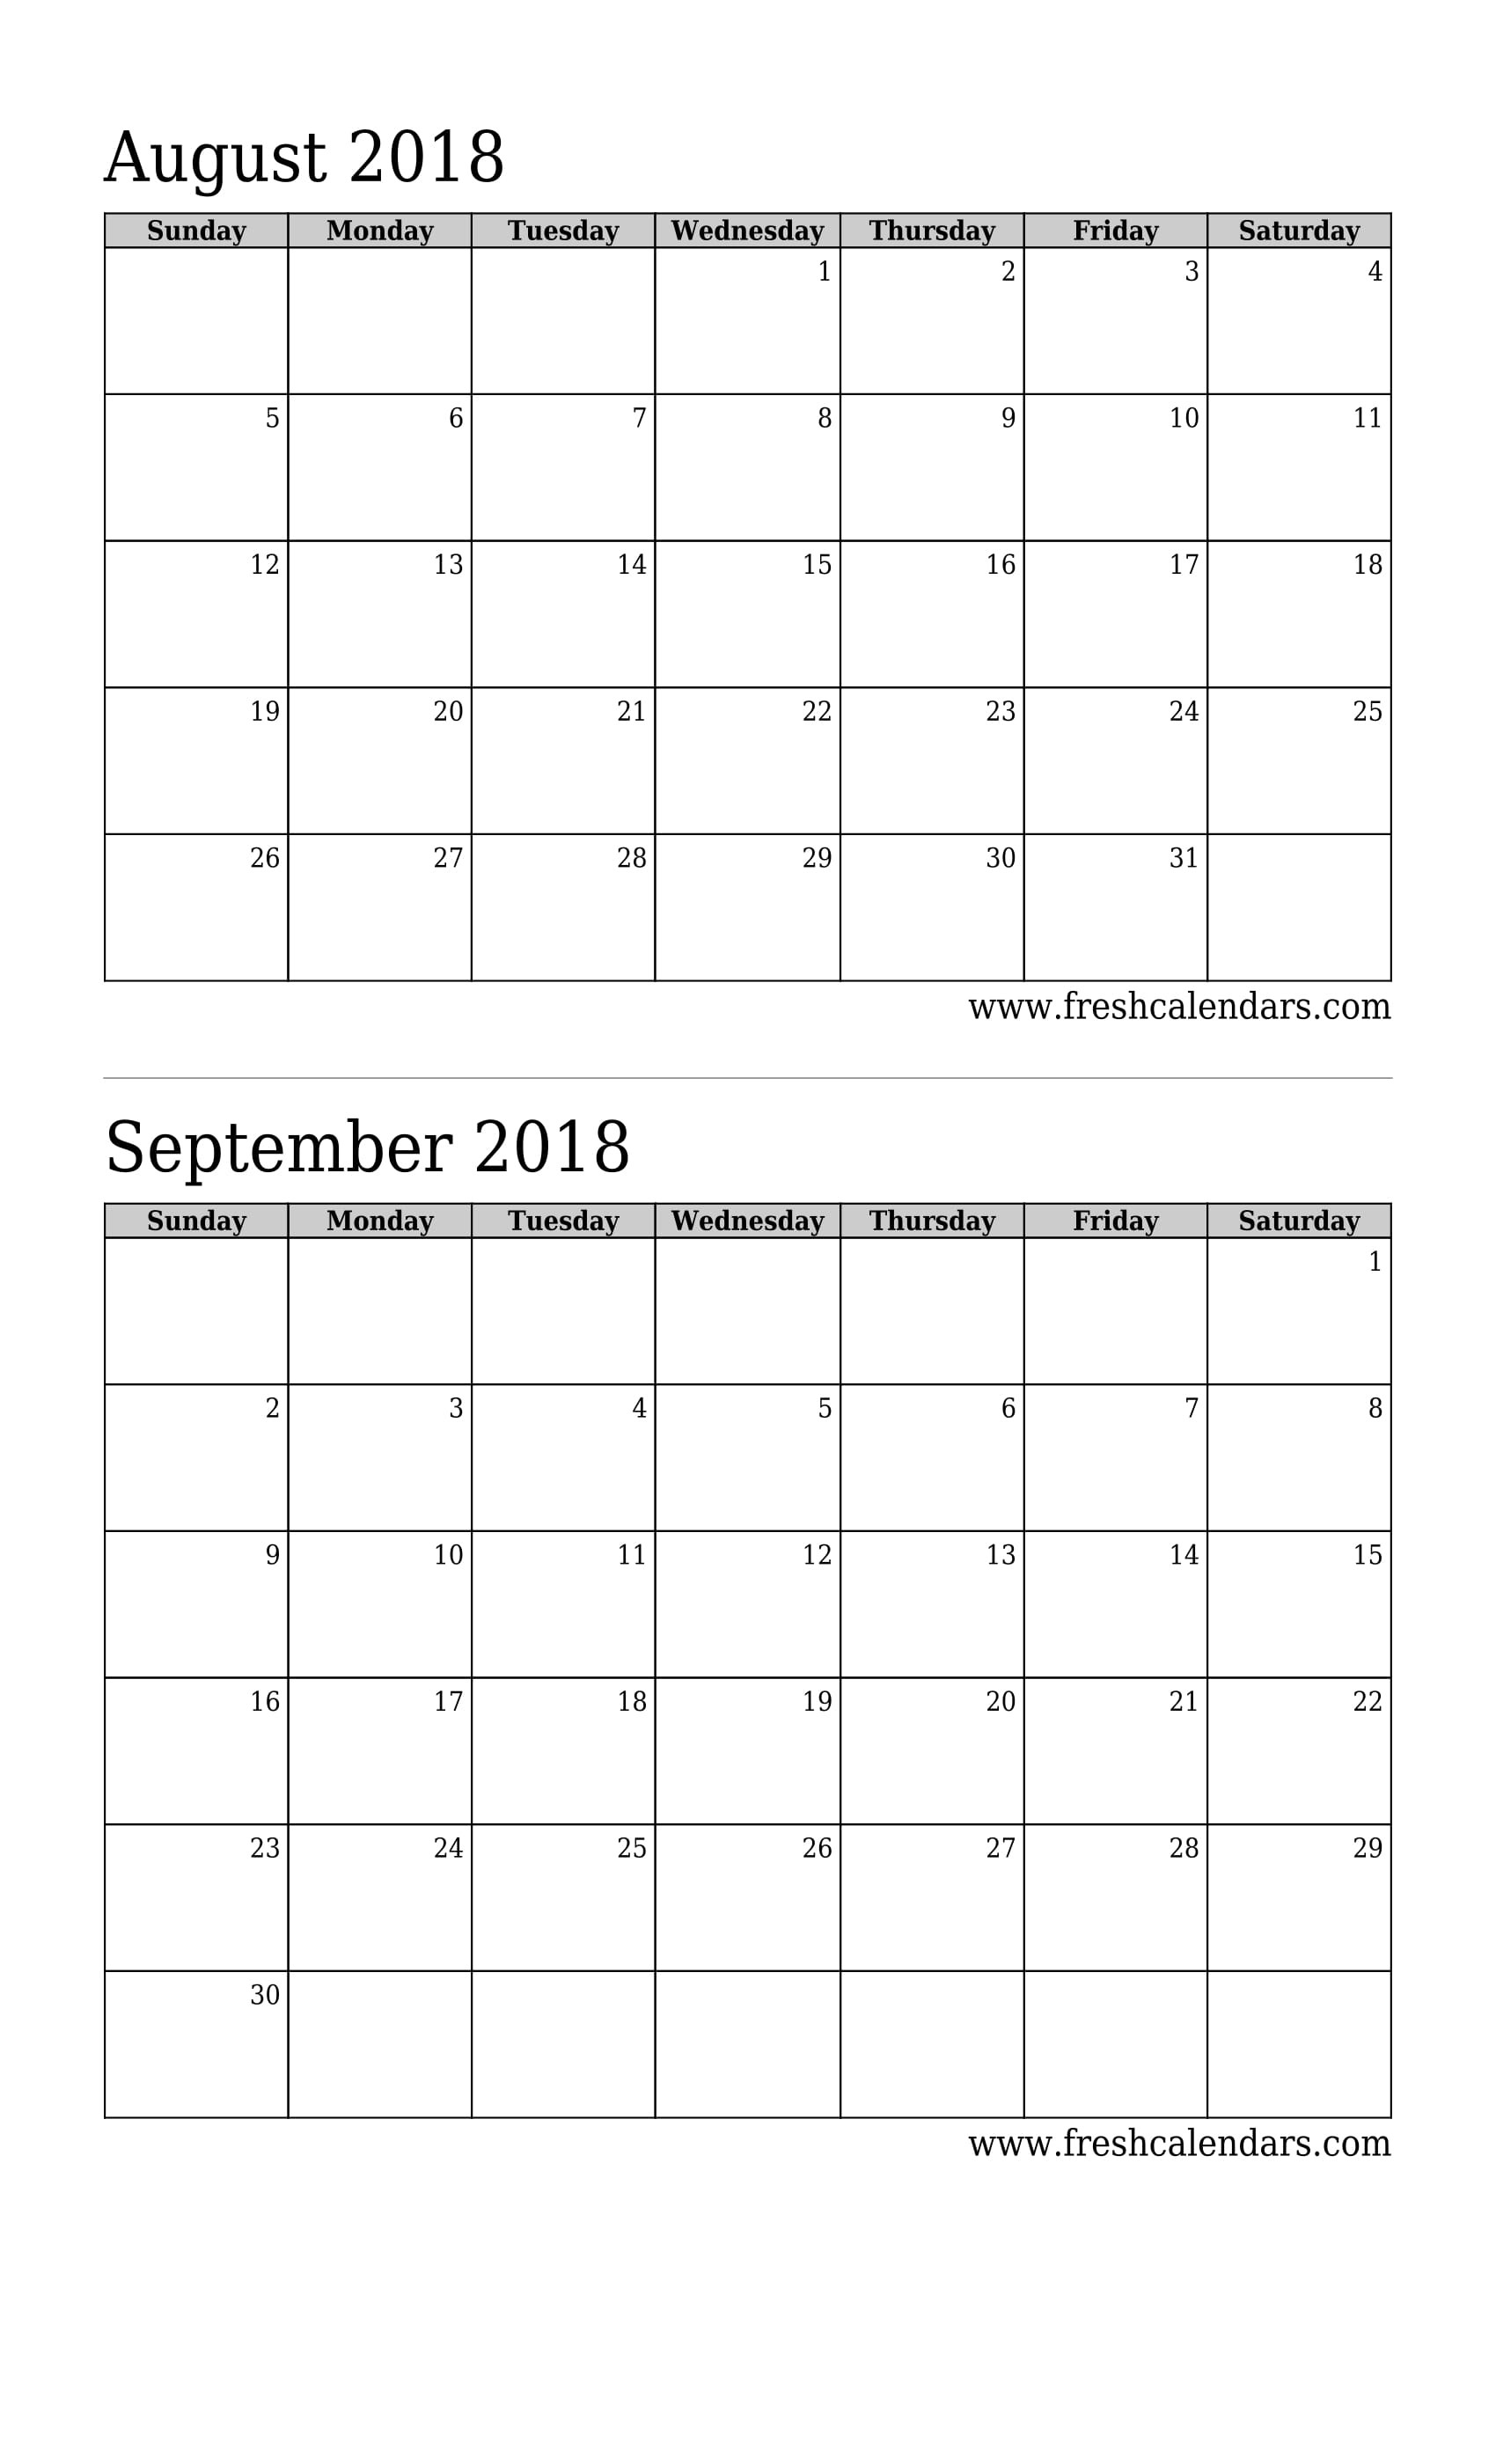 August 2018 Calendar Printable - Fresh Calendars-Blank 2 Month Calendar Template